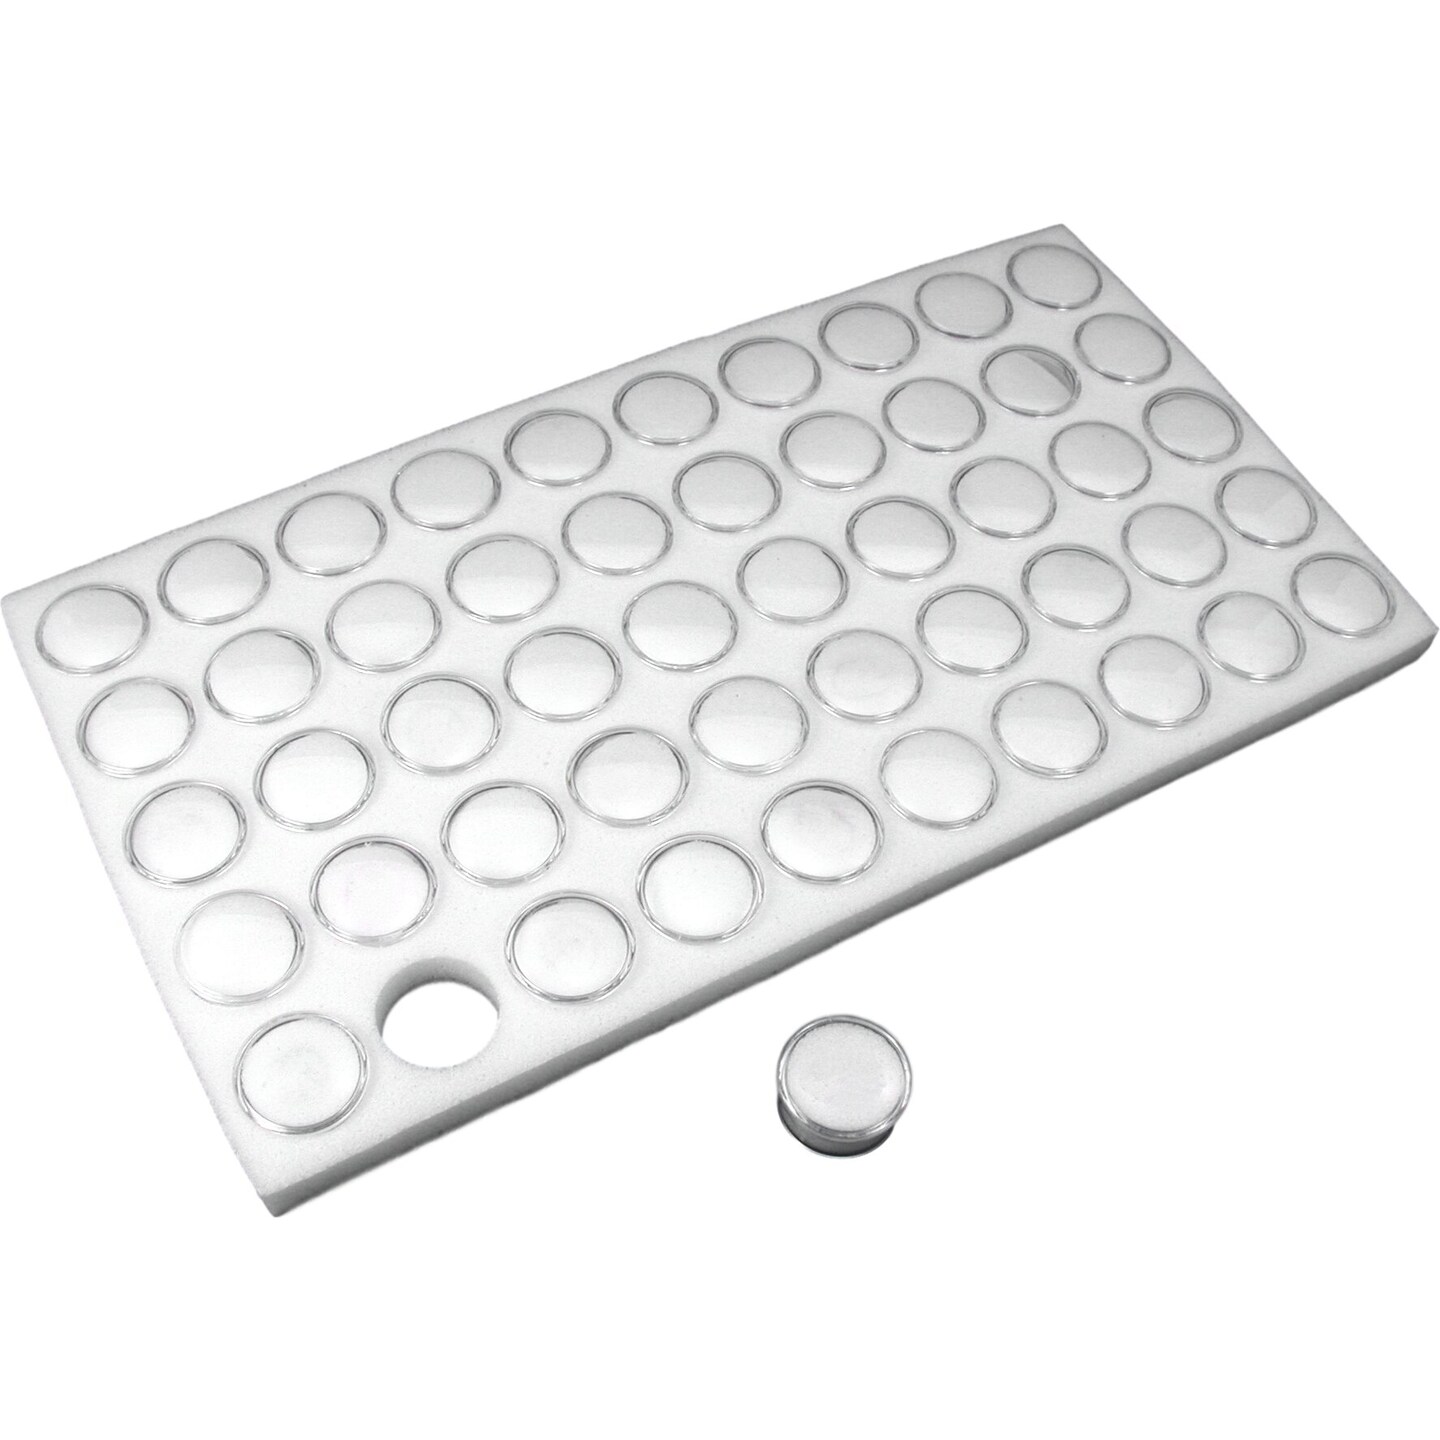 White Plastic Stackable Jewelry Display Tray w/ White 50 Gem Jar Insert